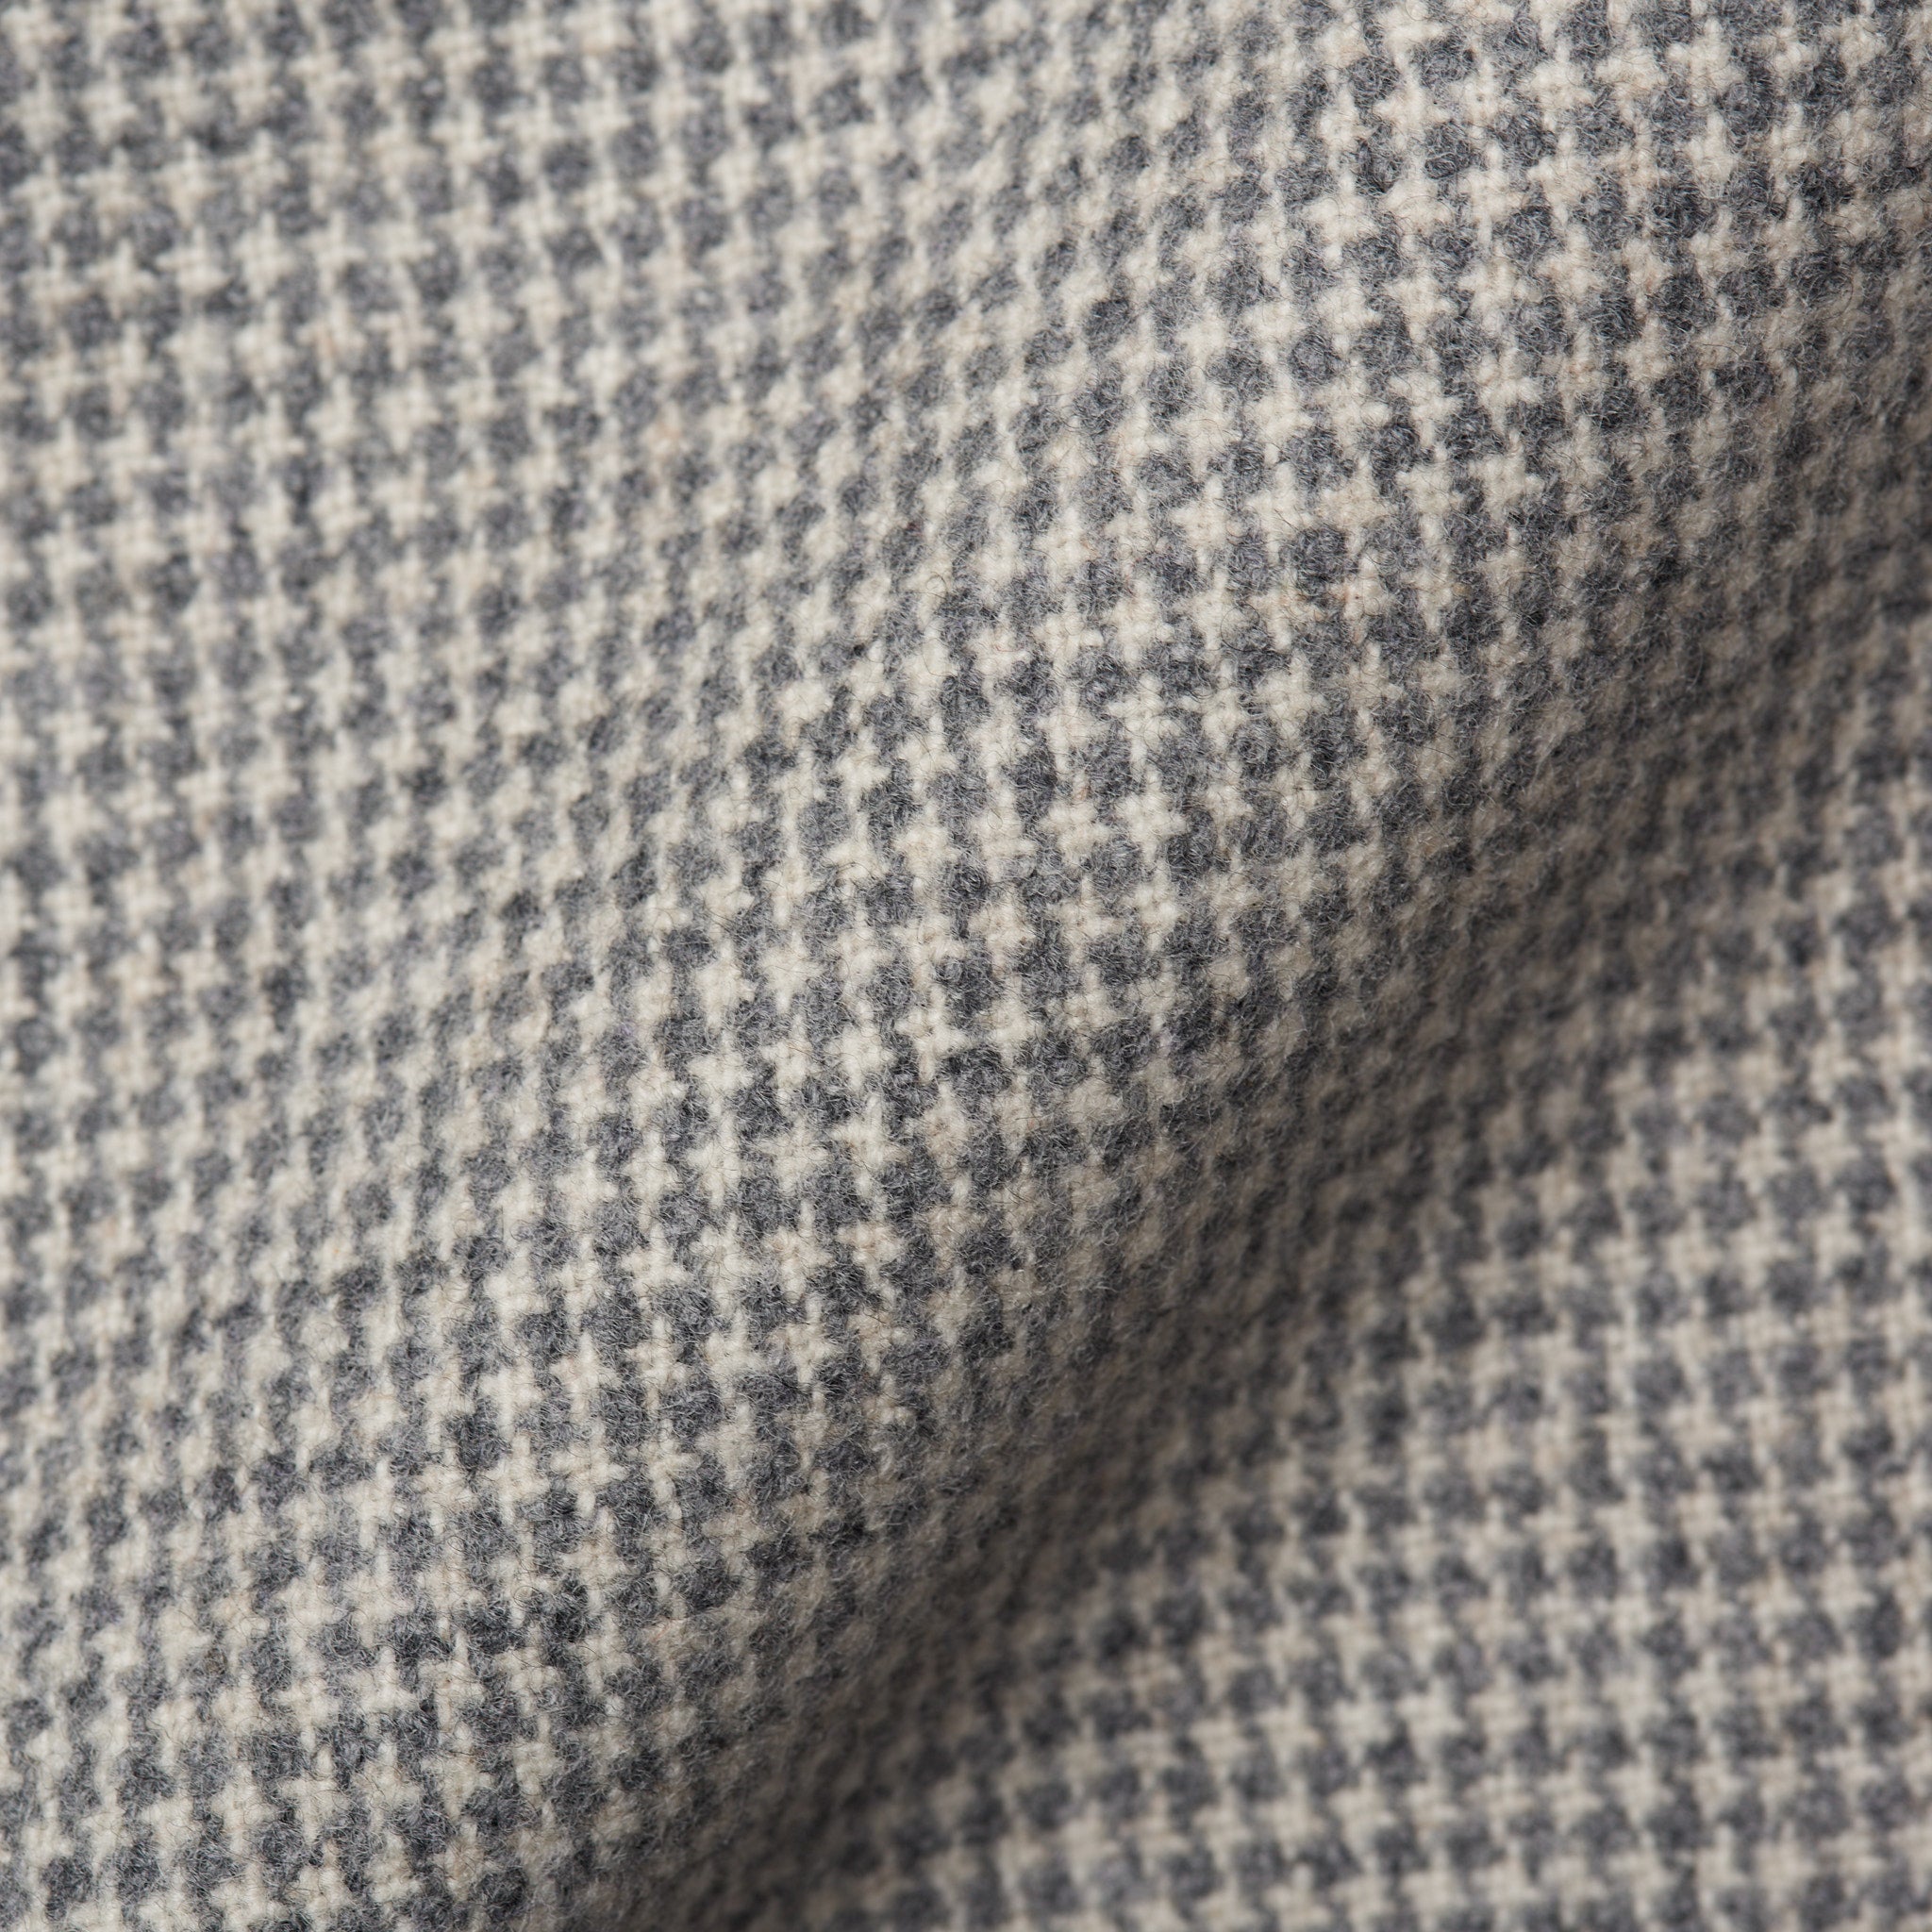 D'AVENZA Handmade Gray Houndstooth Wool-Cashmere Coat EU 50 NEW US 40 D'AVENZA